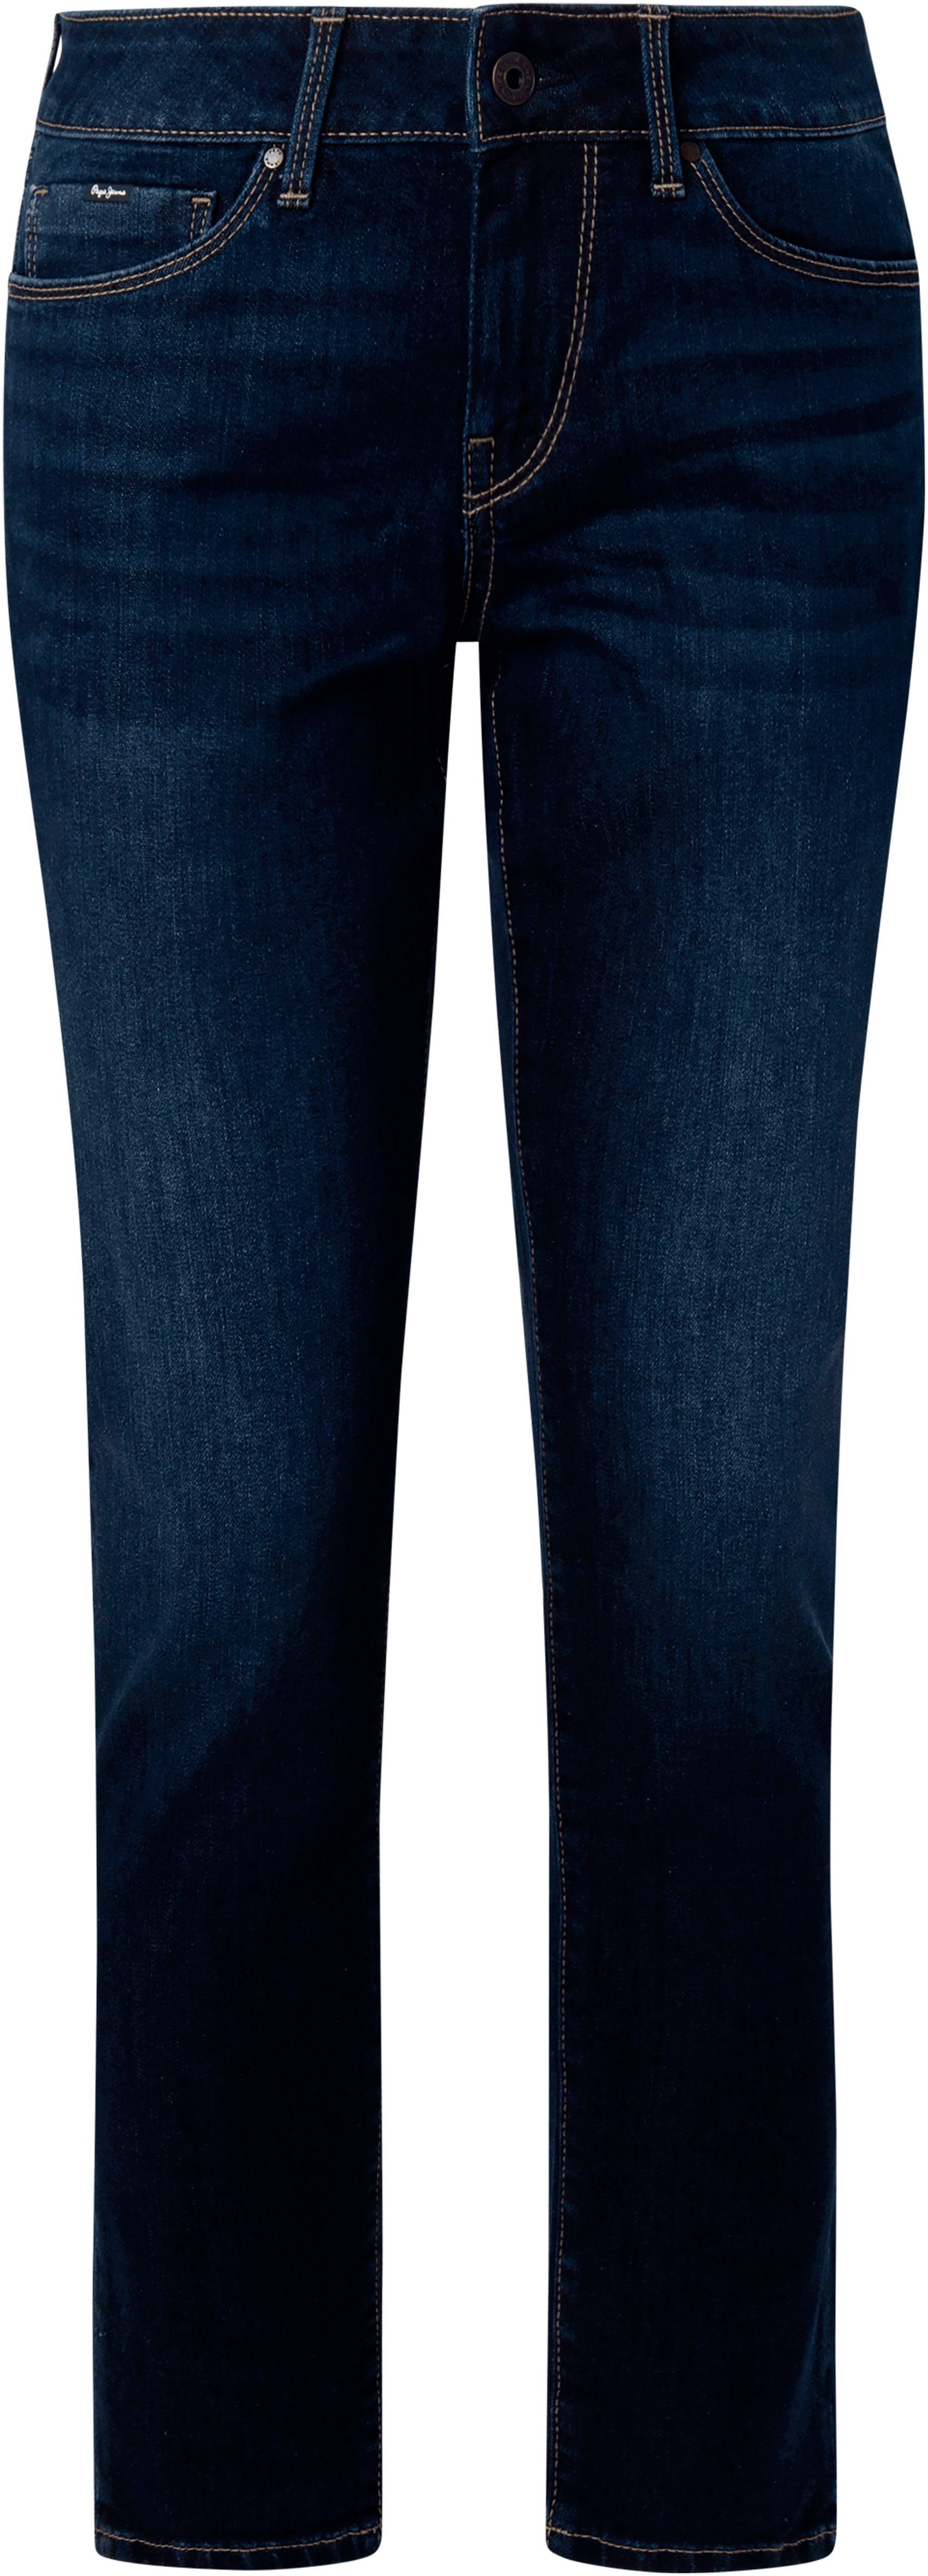 Pepe Jeans Skinny-fit-Jeans 5-Pocket-Stil im SOHO und mit DARK Stretch-Anteil Bund USED 1-Knopf